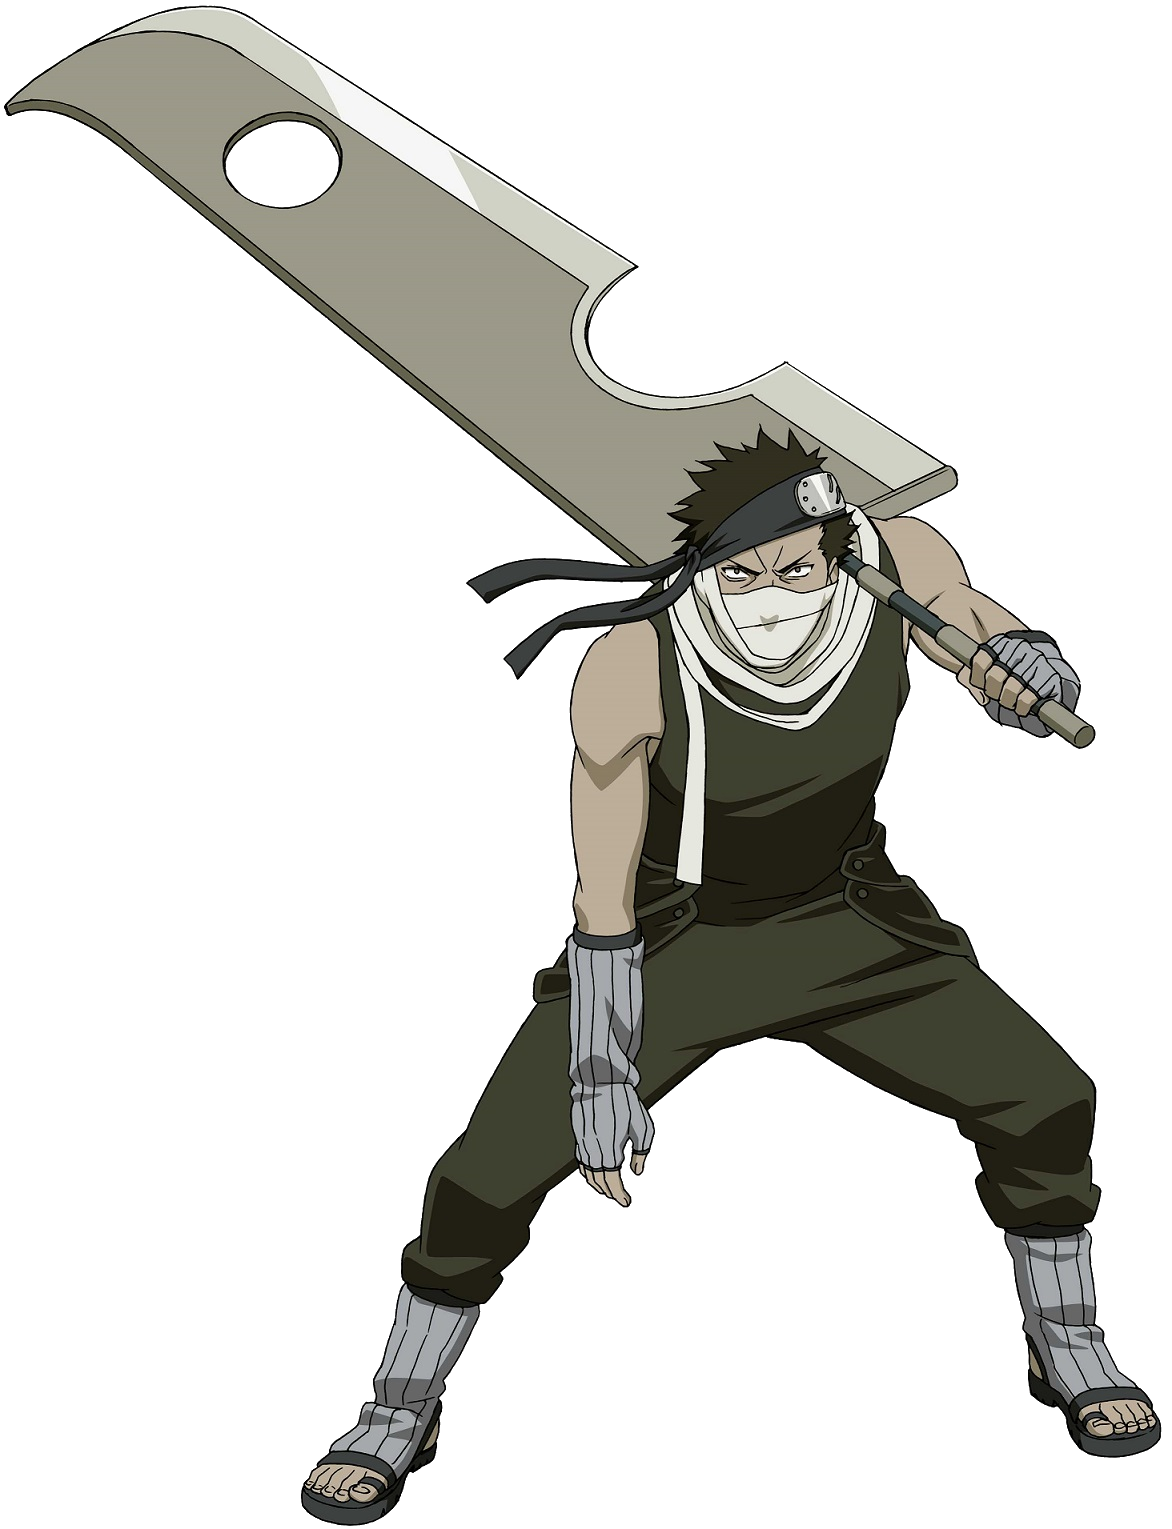 Featured image of post Naruto Zabuza Sword Making a paper sword zabuza from naruto